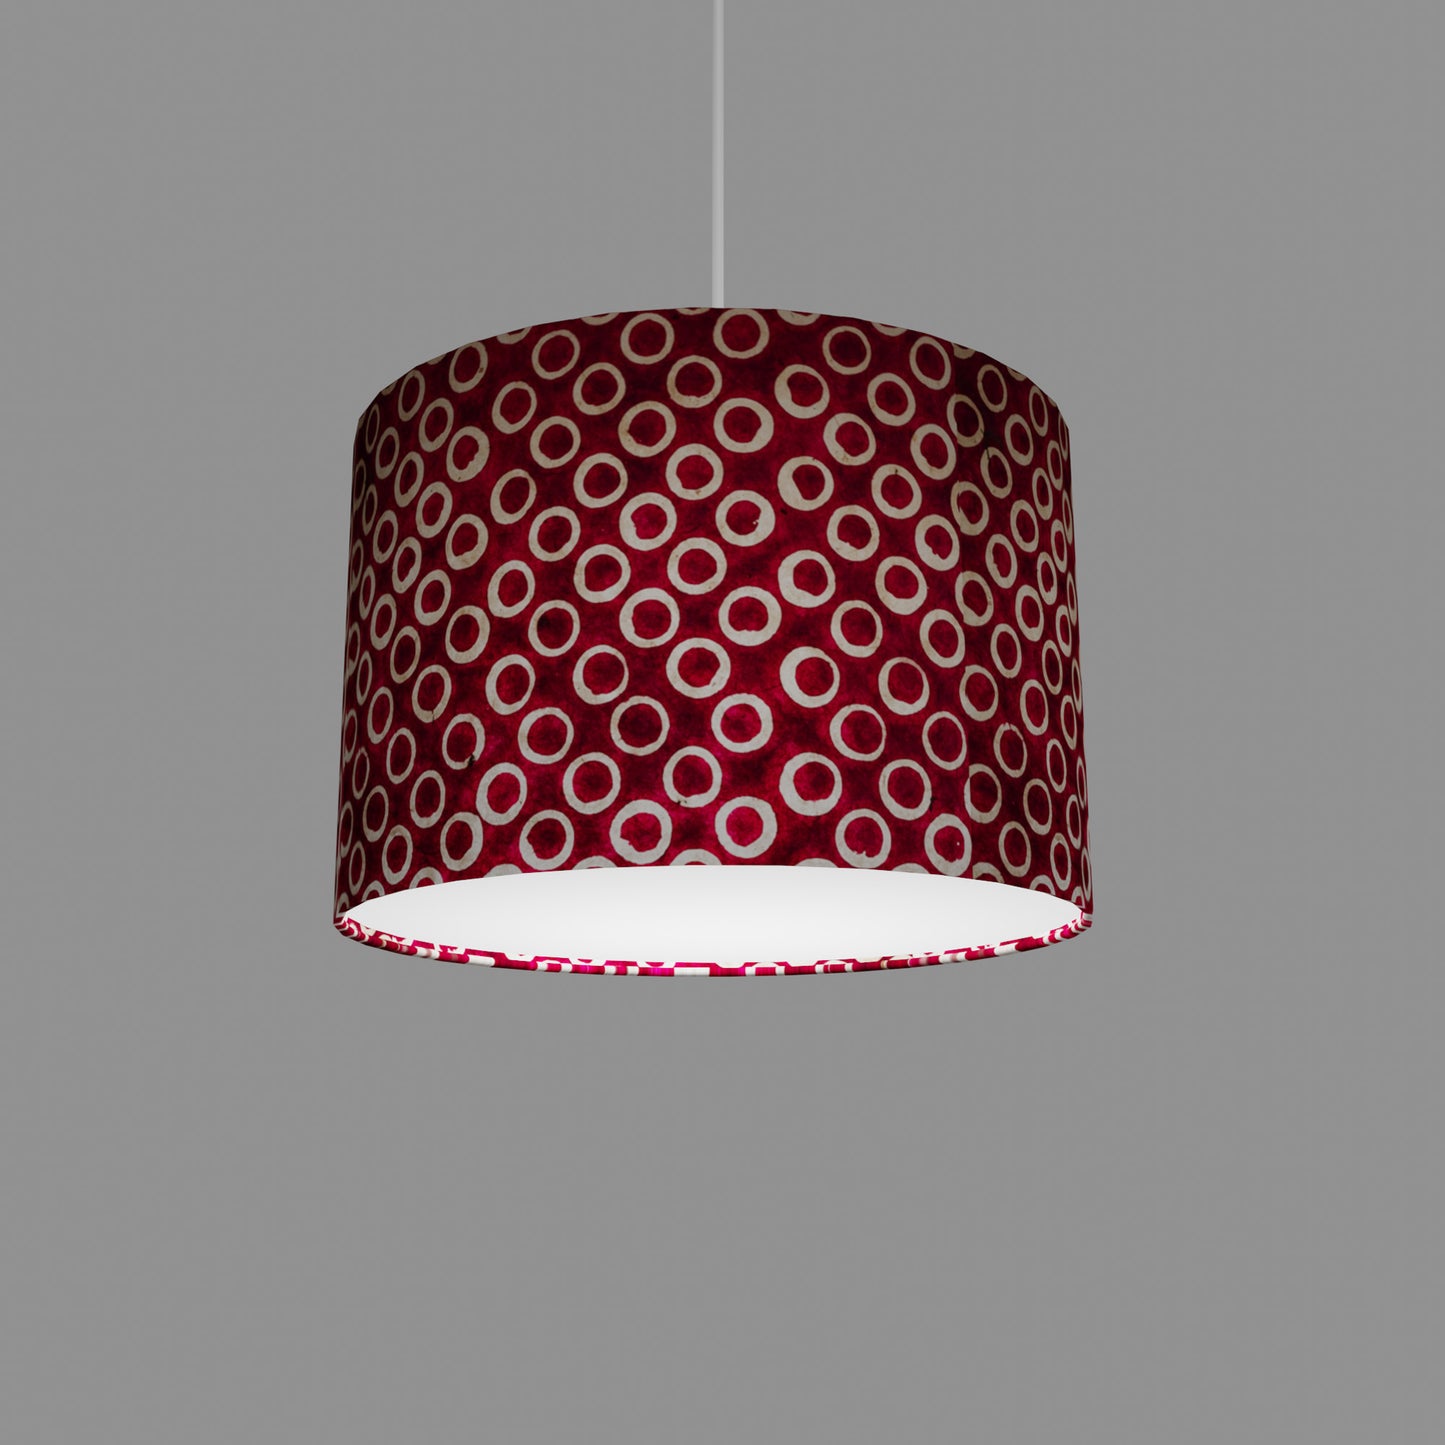 Drum Lamp Shade - P73 - Batik Cranberry Circles, 30cm(d) x 20cm(h)